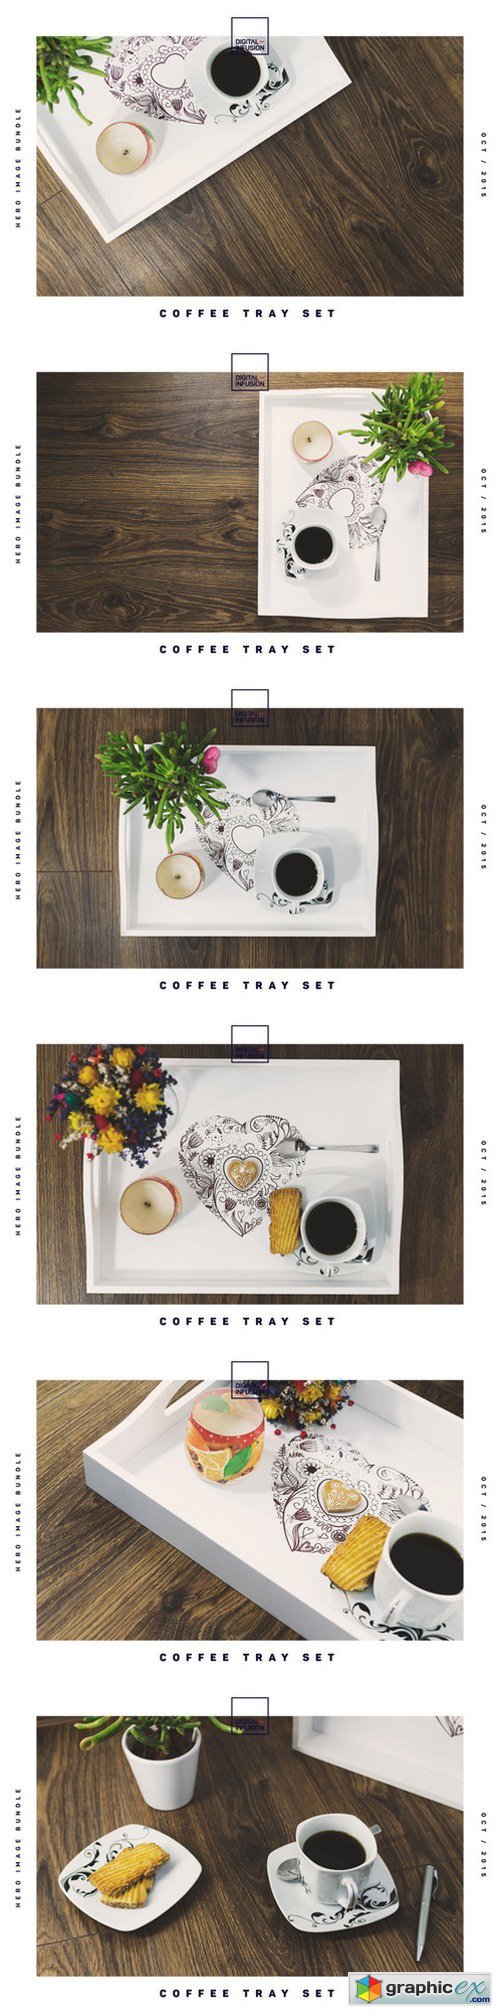 Coffee Tray Set / Hero Image Bundle